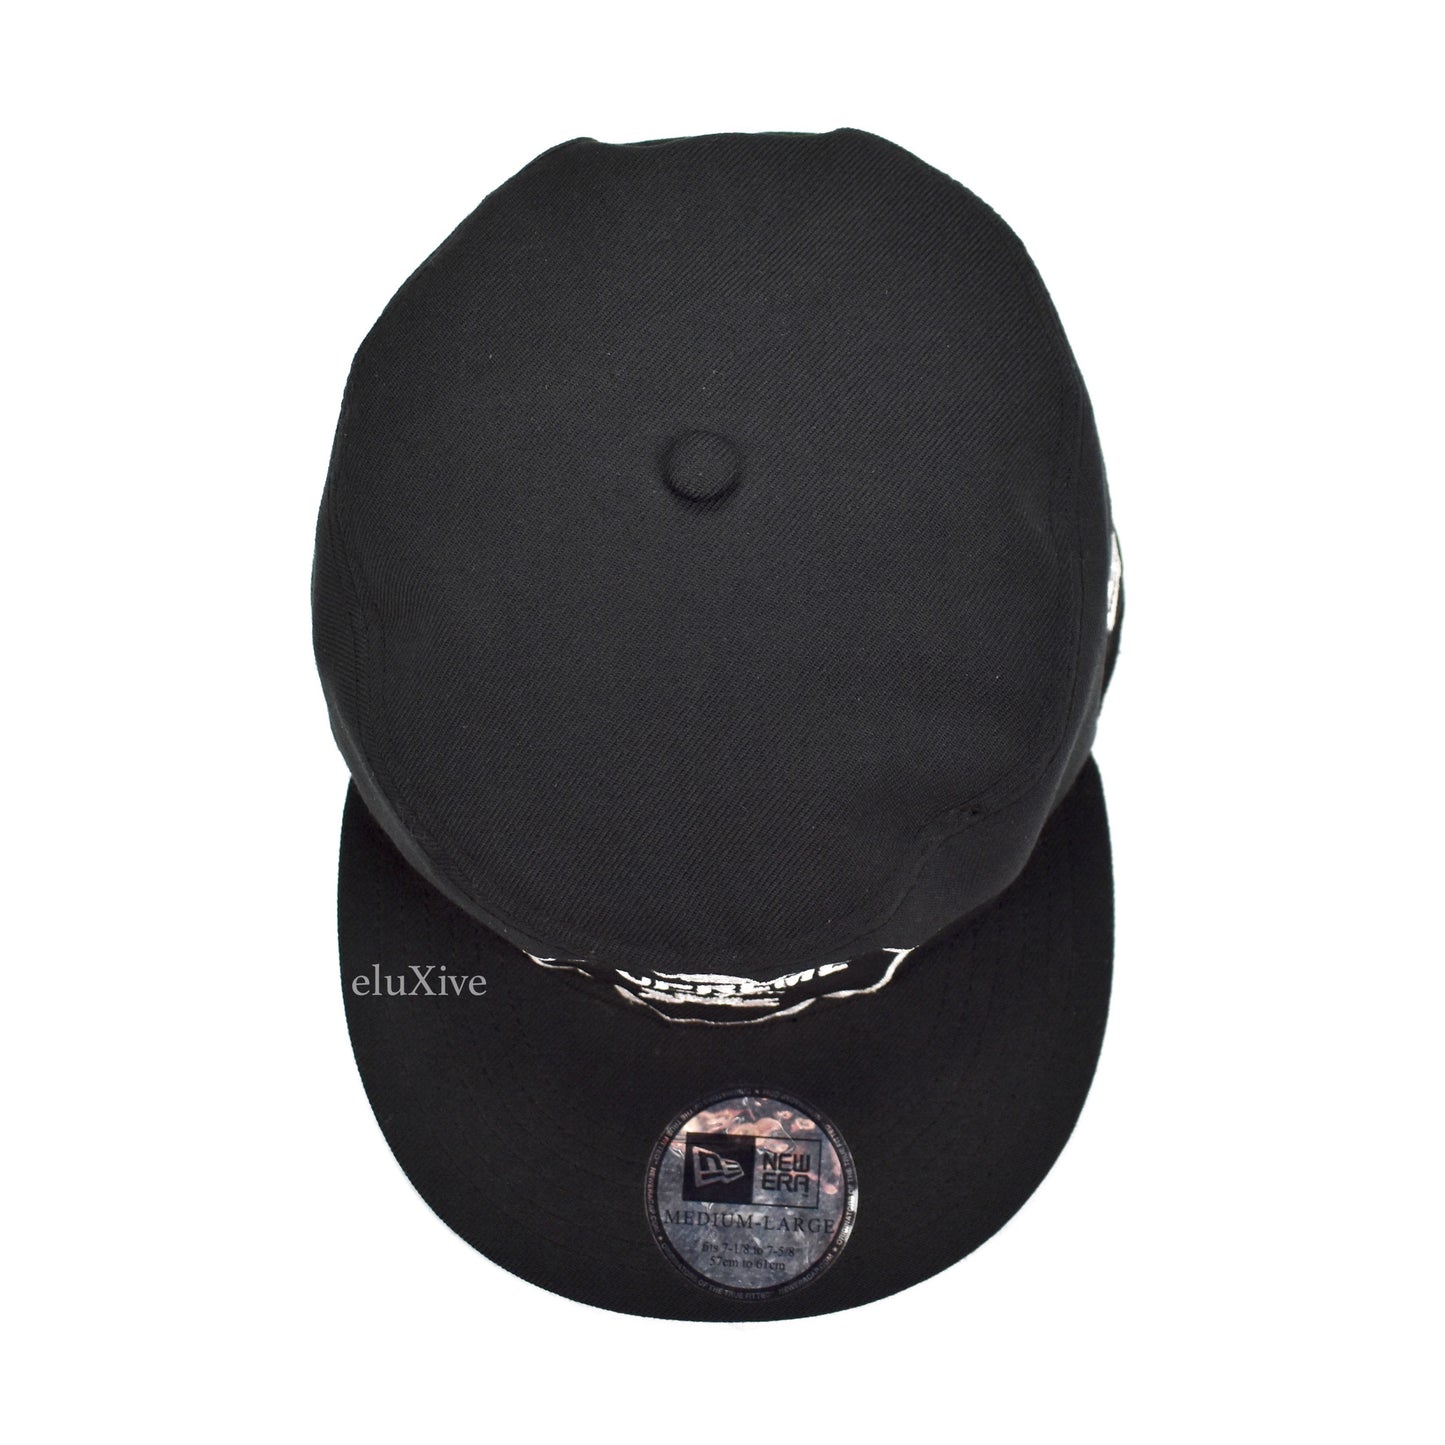 Supreme x New Era - 2008 'Prada' Logo Flat Top Hat